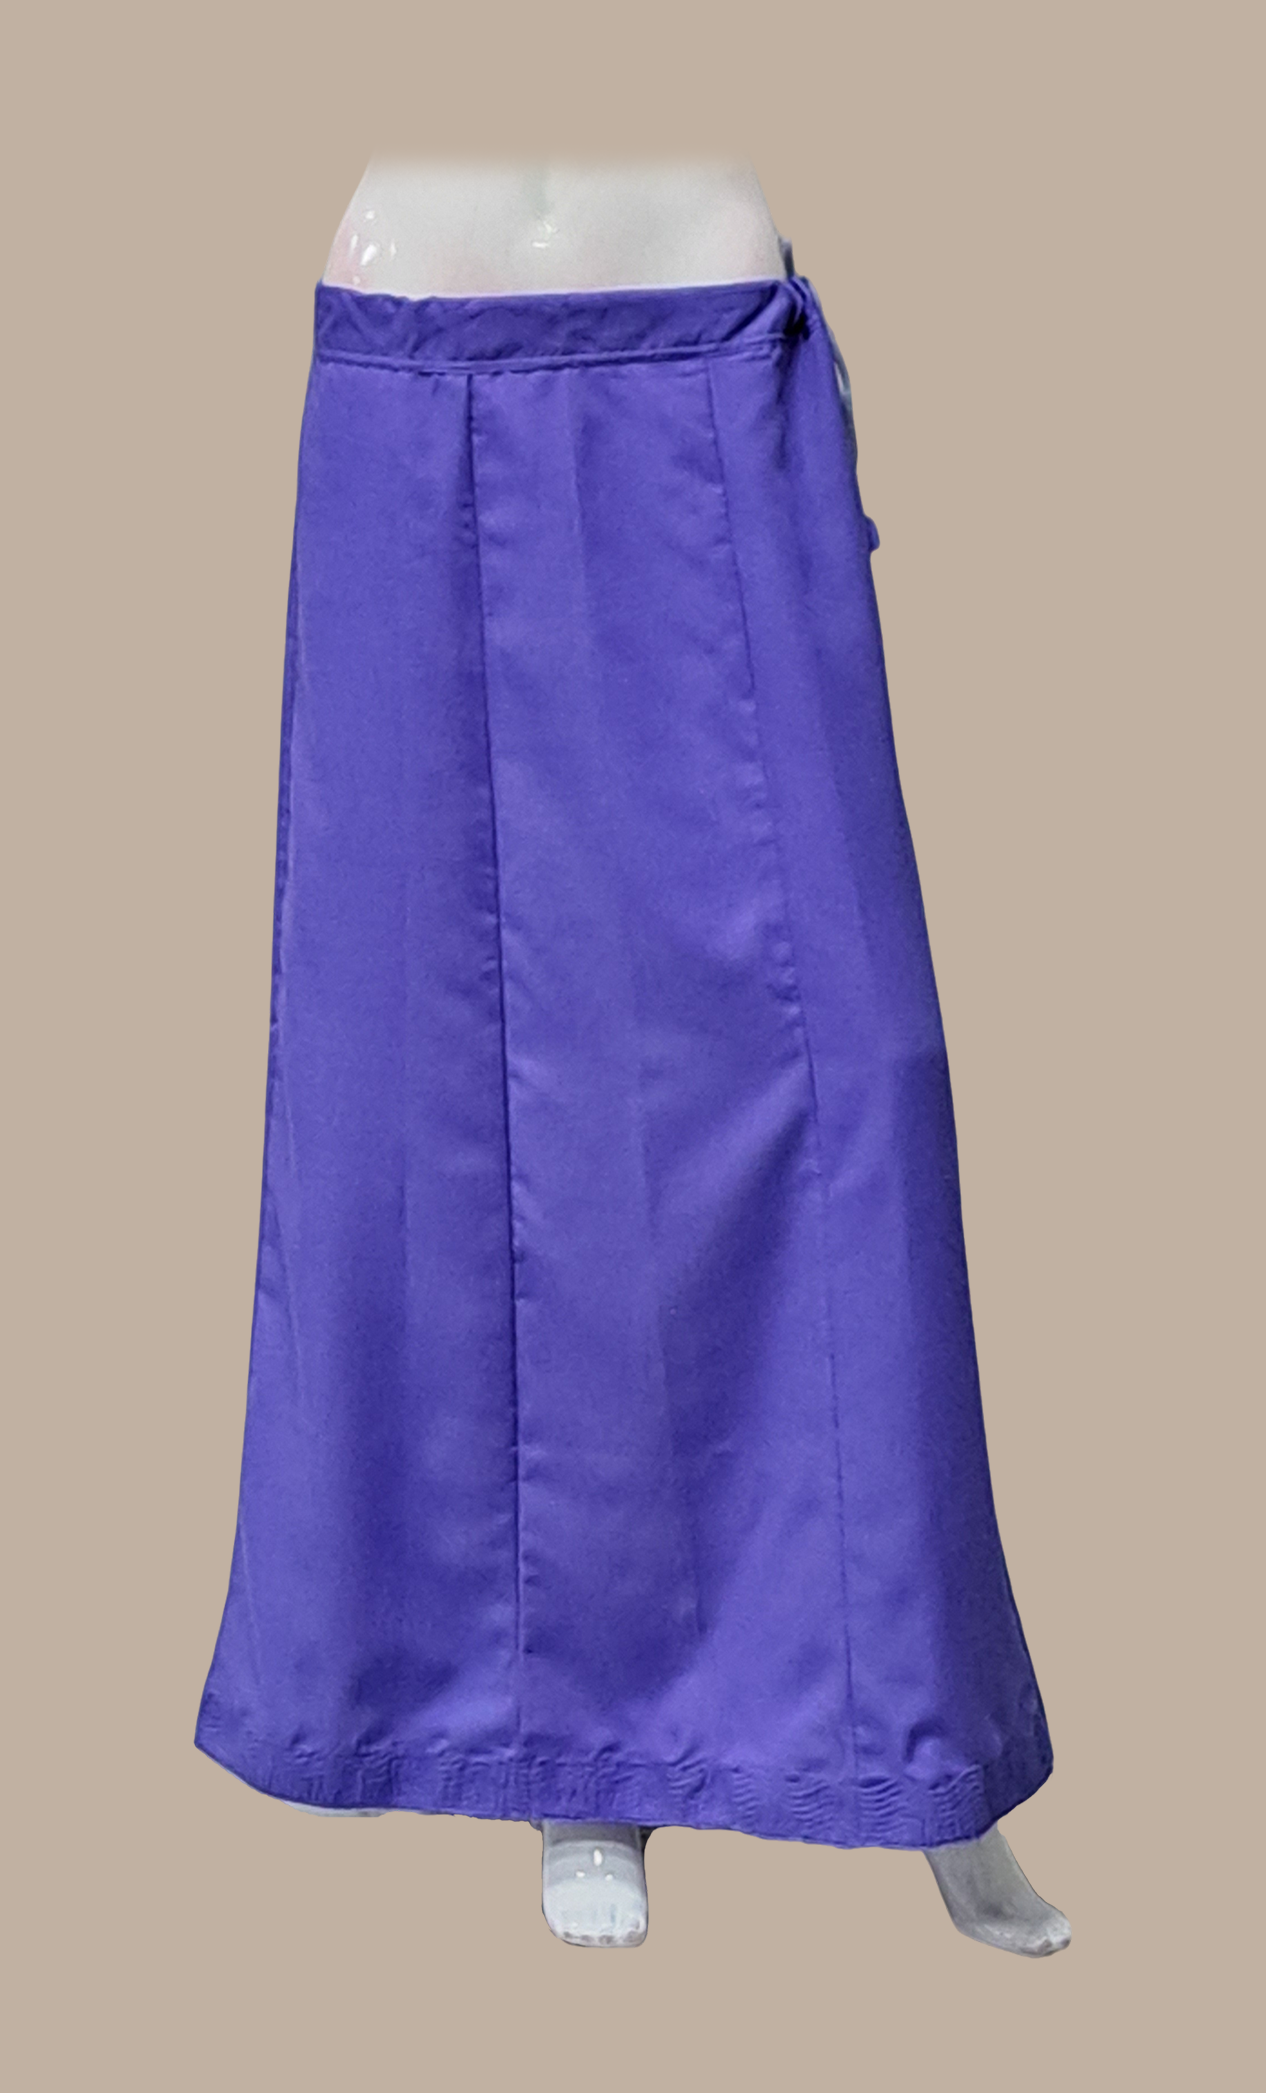 Violet Cotton Under Skirt